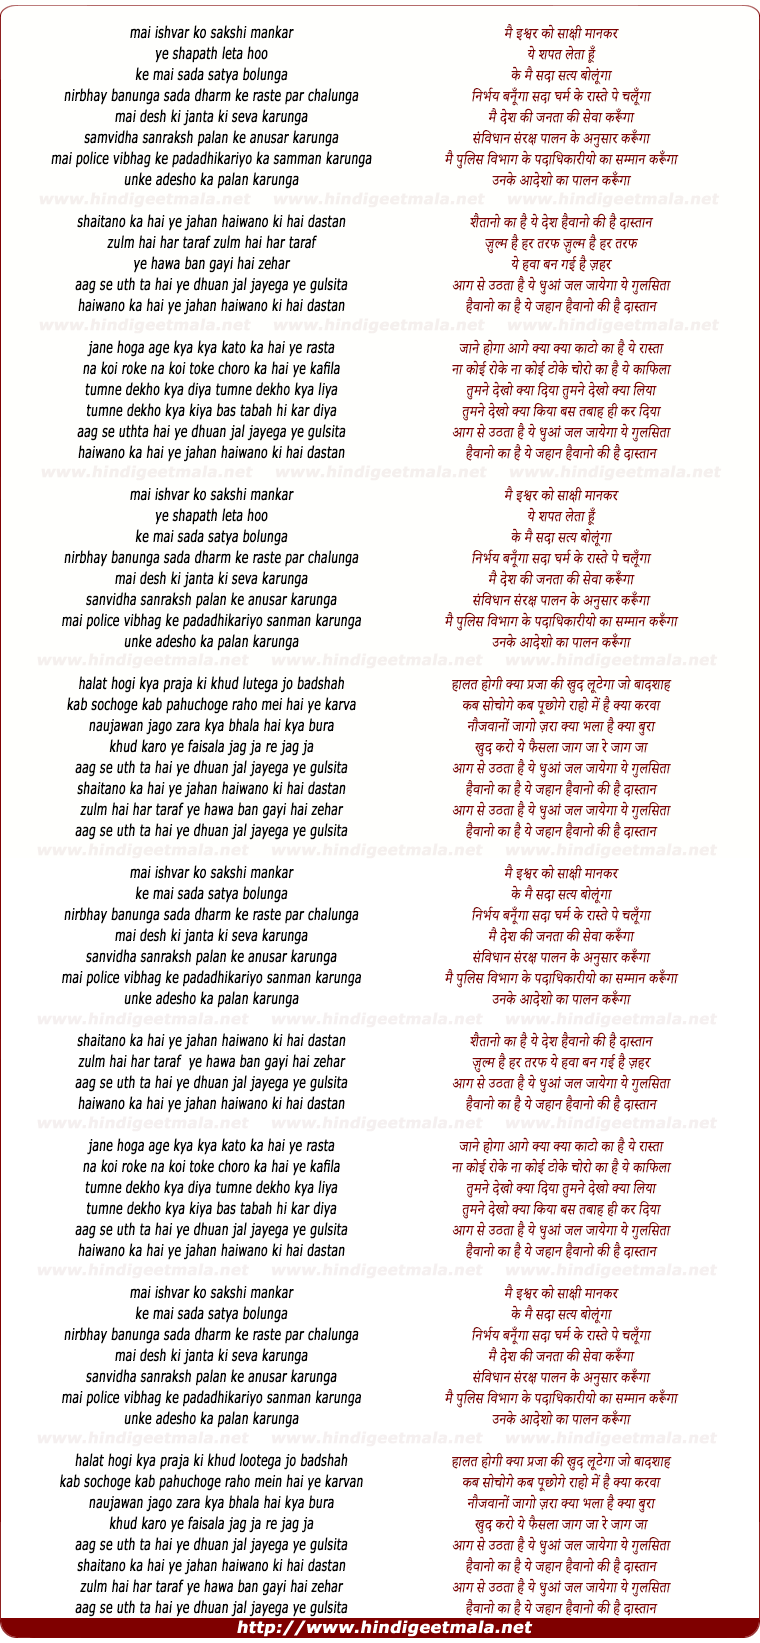 lyrics of song Ye Shapath Leta Hoo